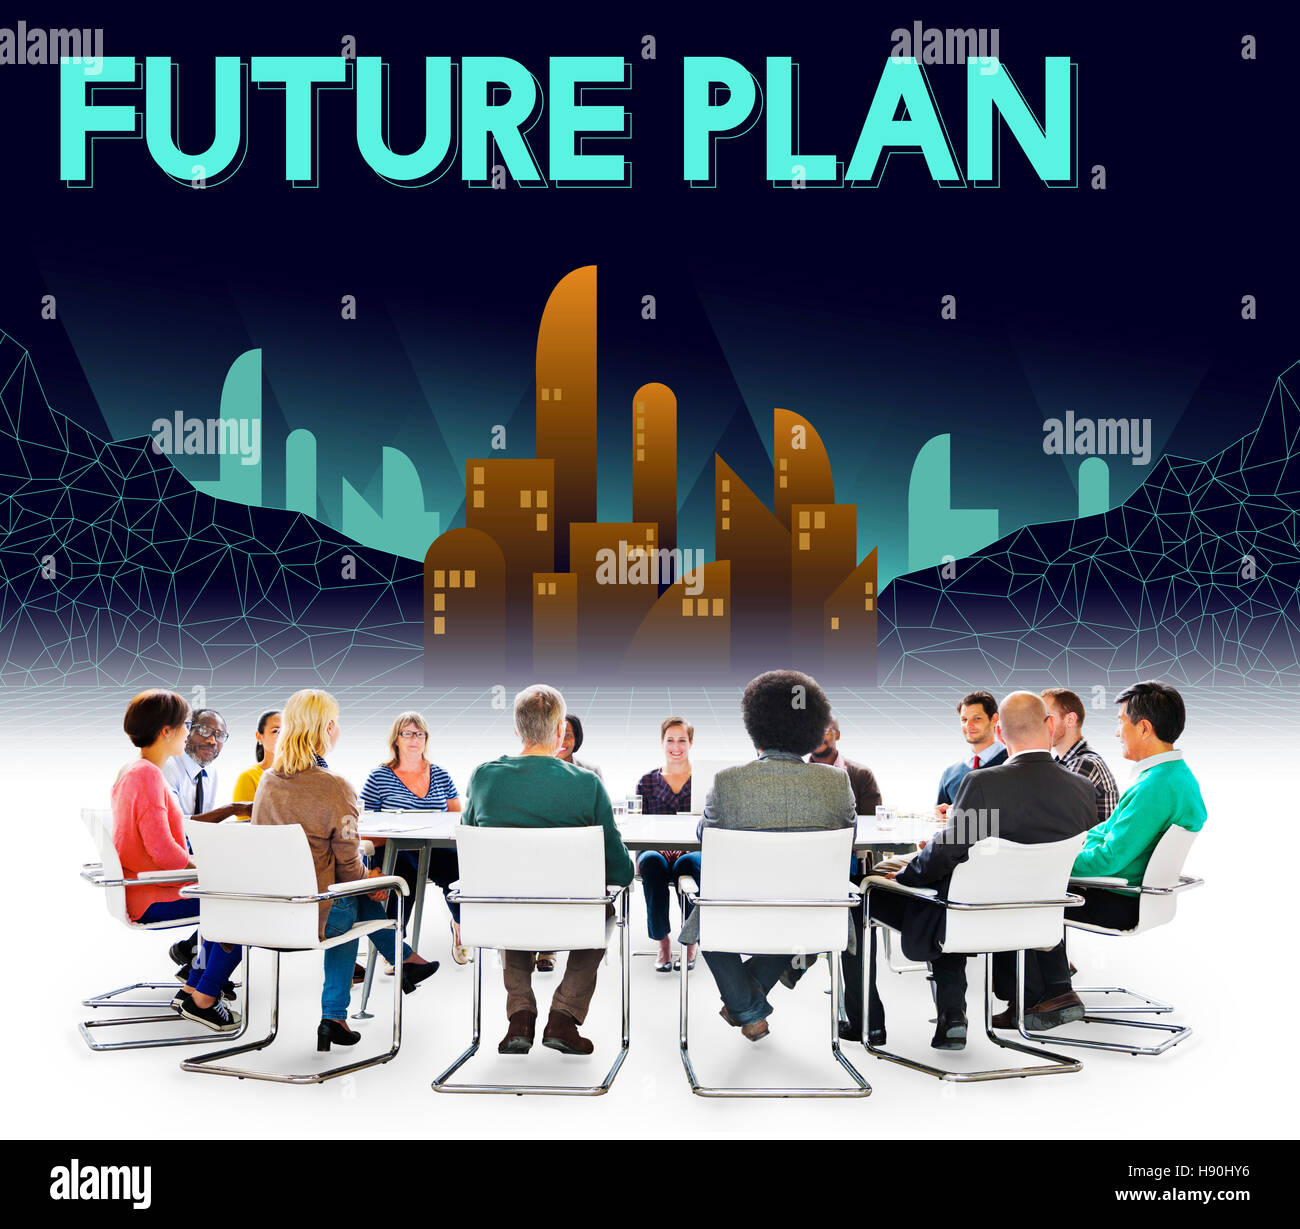 Furutistic Future Plan Urban Structure Concept Stock Photo